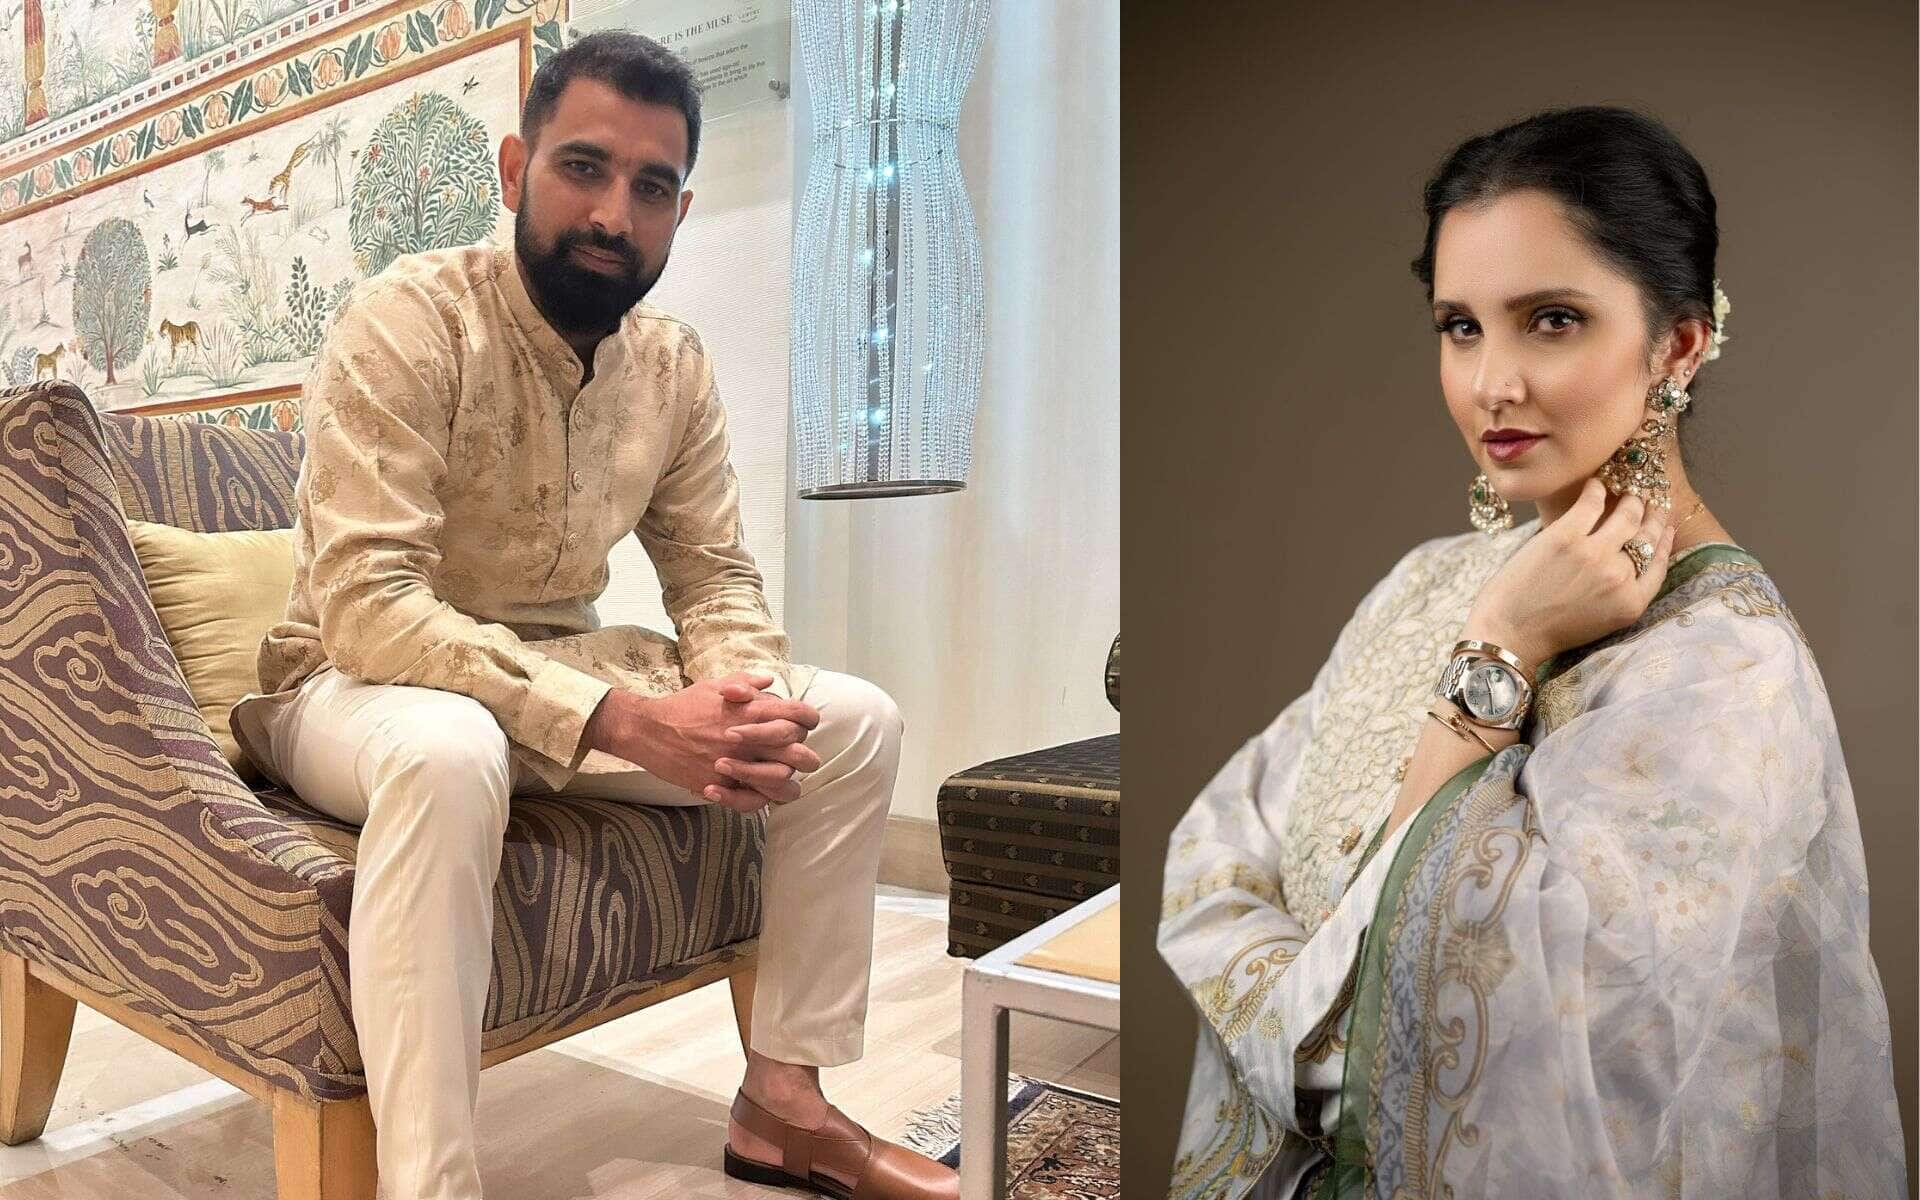 Speculations around Shami-Mirza marriage are going around (x.com)